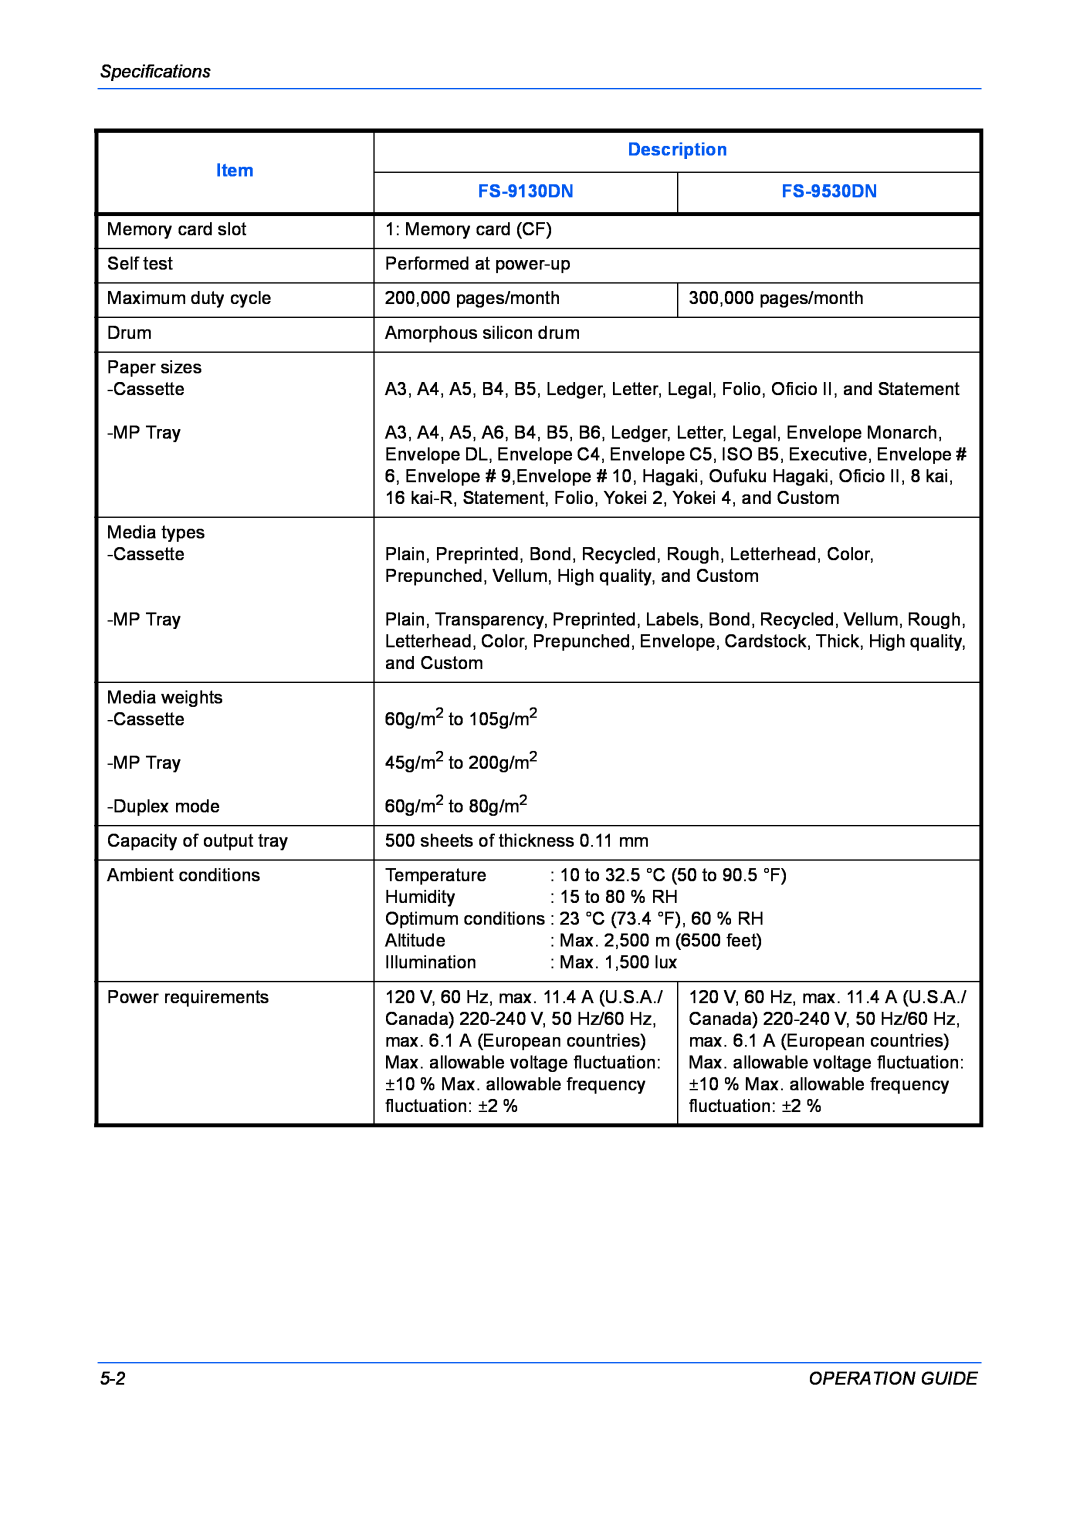 Kyocera FS-9530DN manual Specifications, Description, FS-9130DN, Operation Guide 